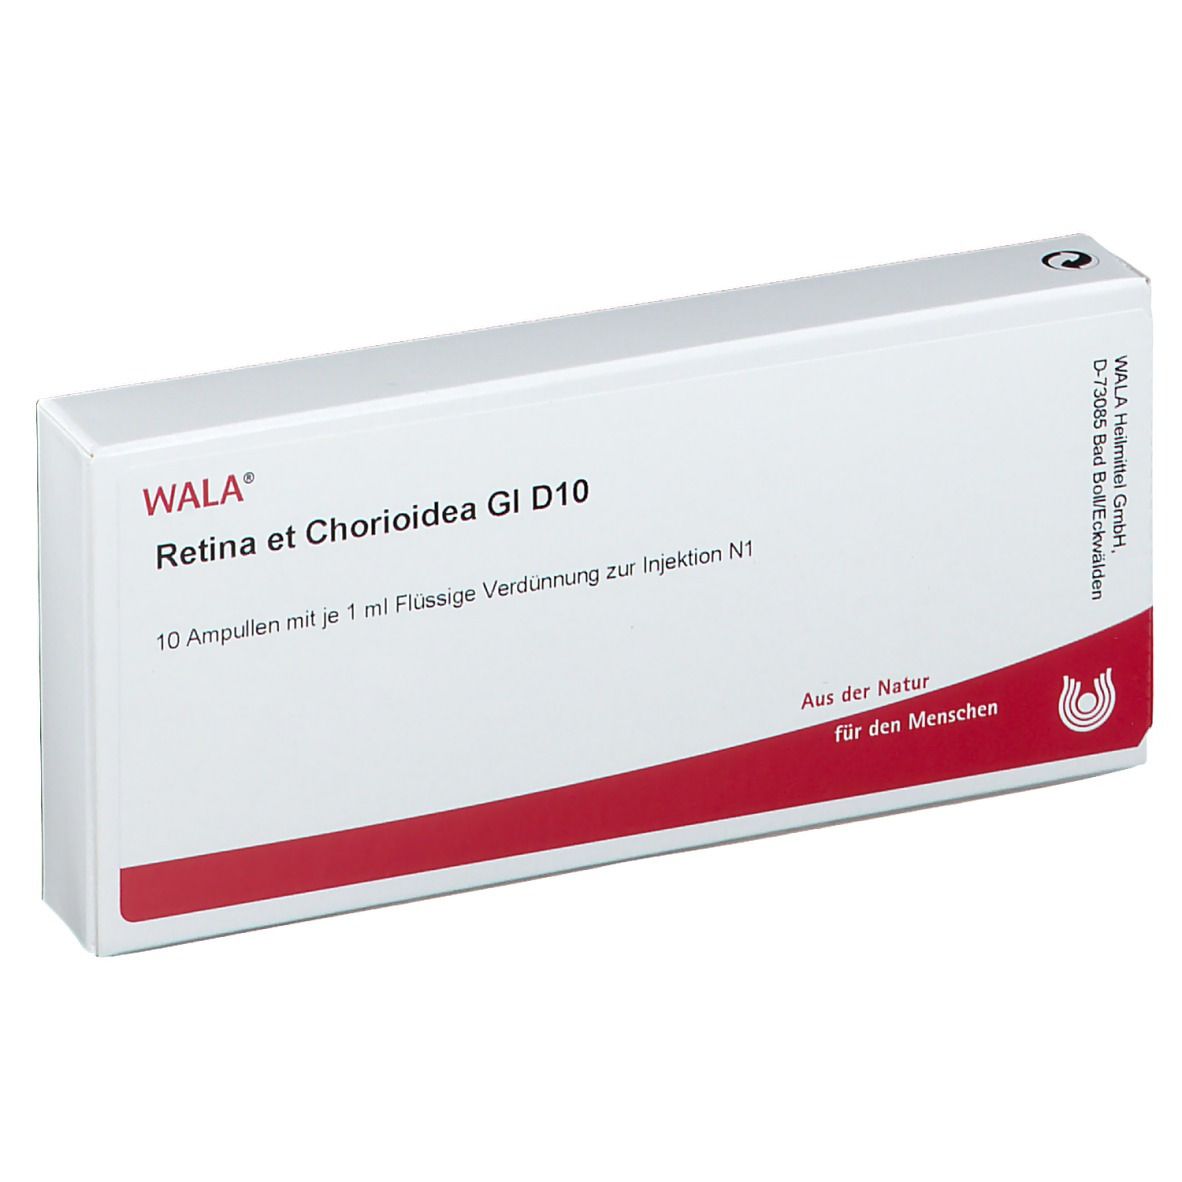 WALA® Retina et Chorioidea Gl D 10